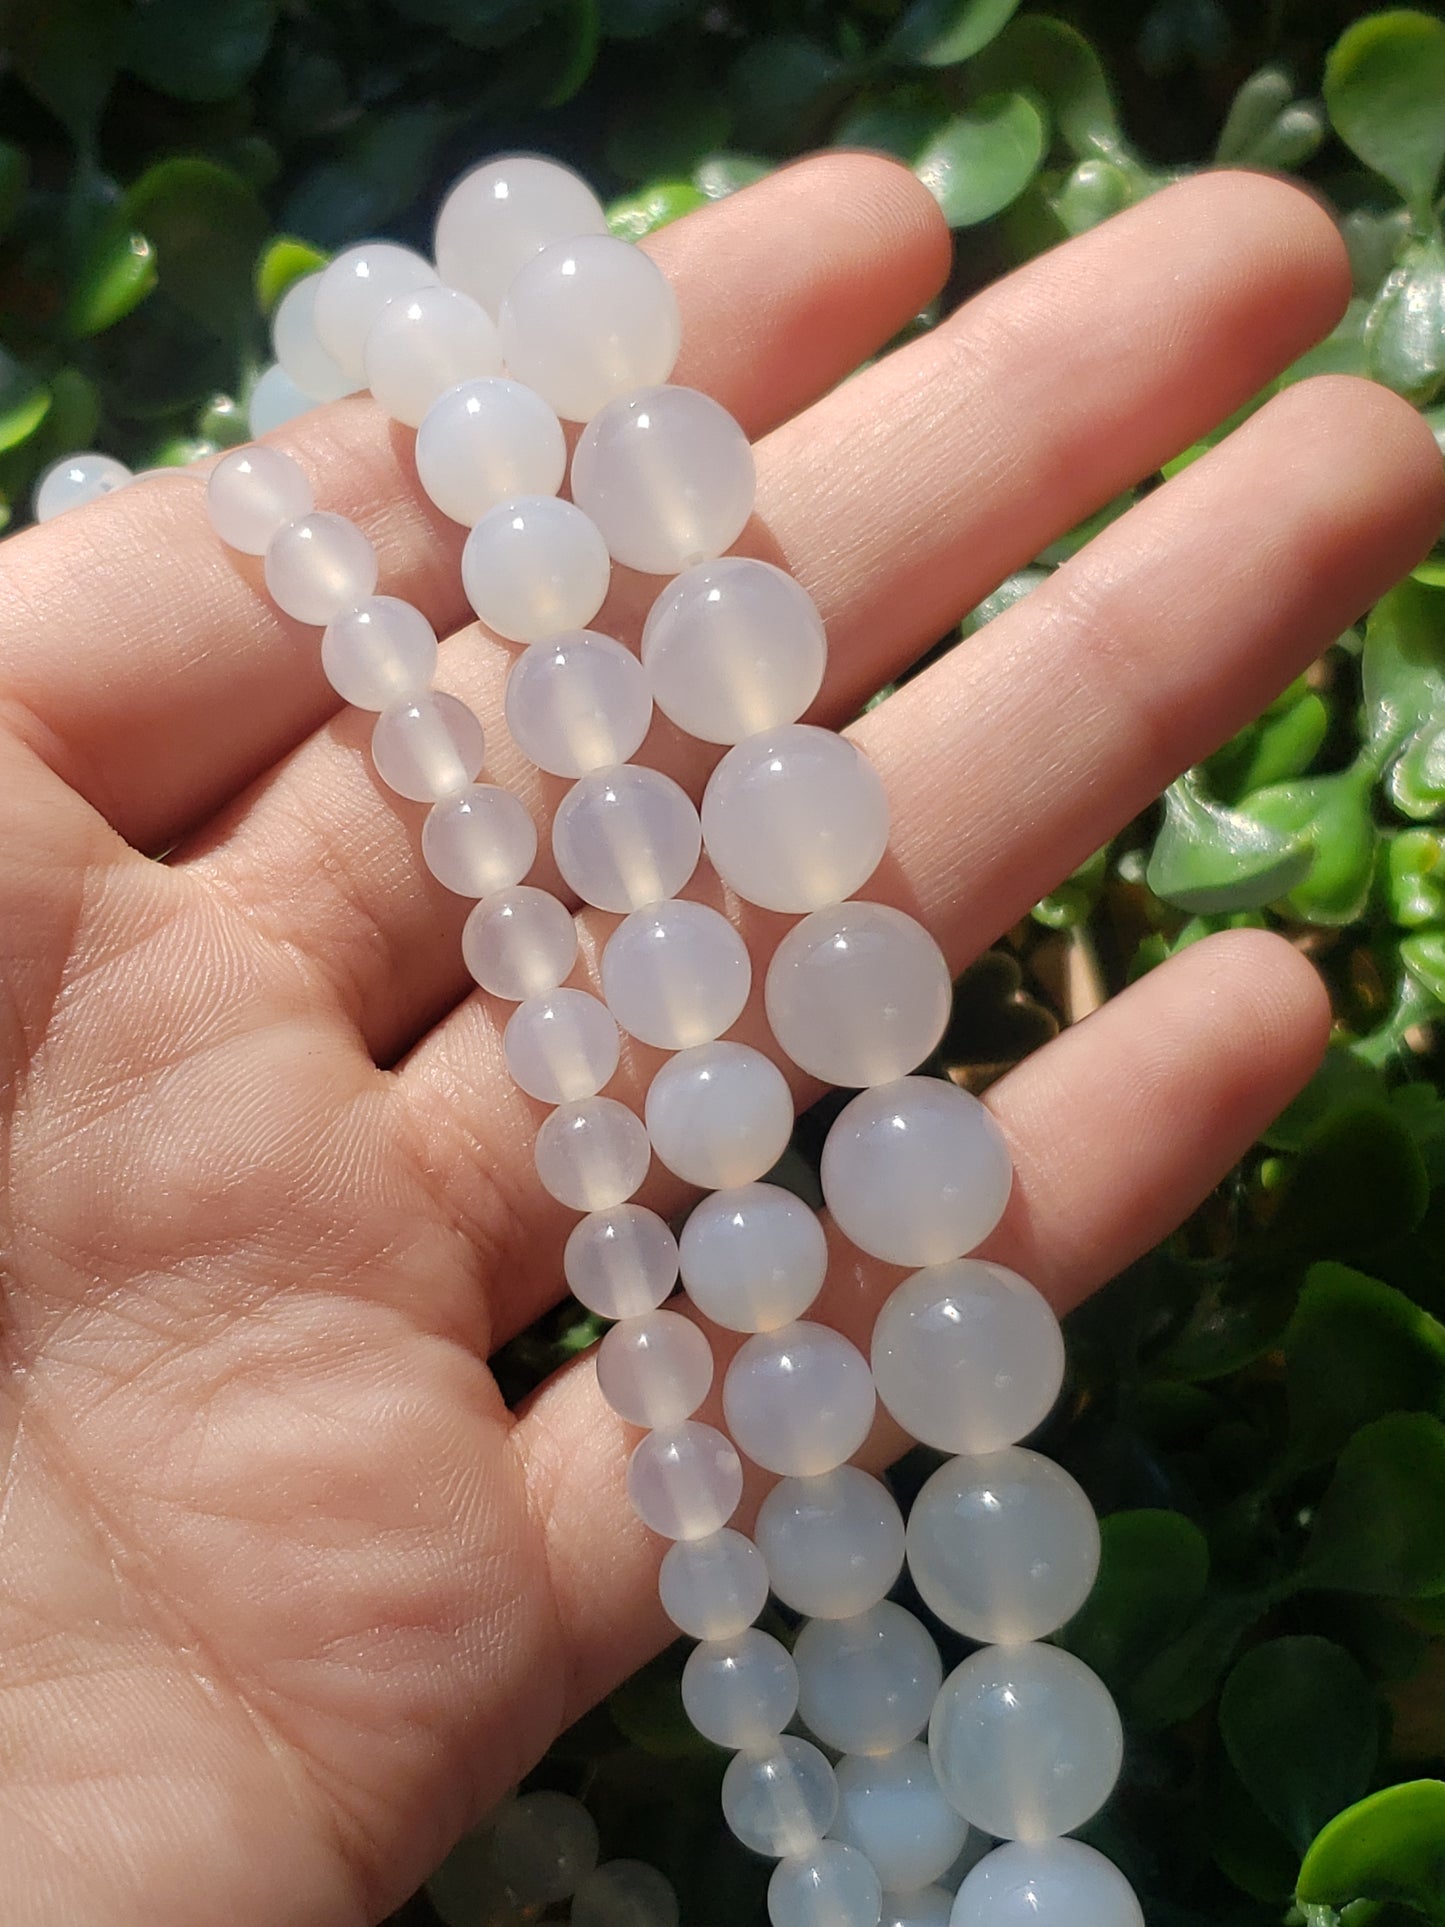 White Agate Beads